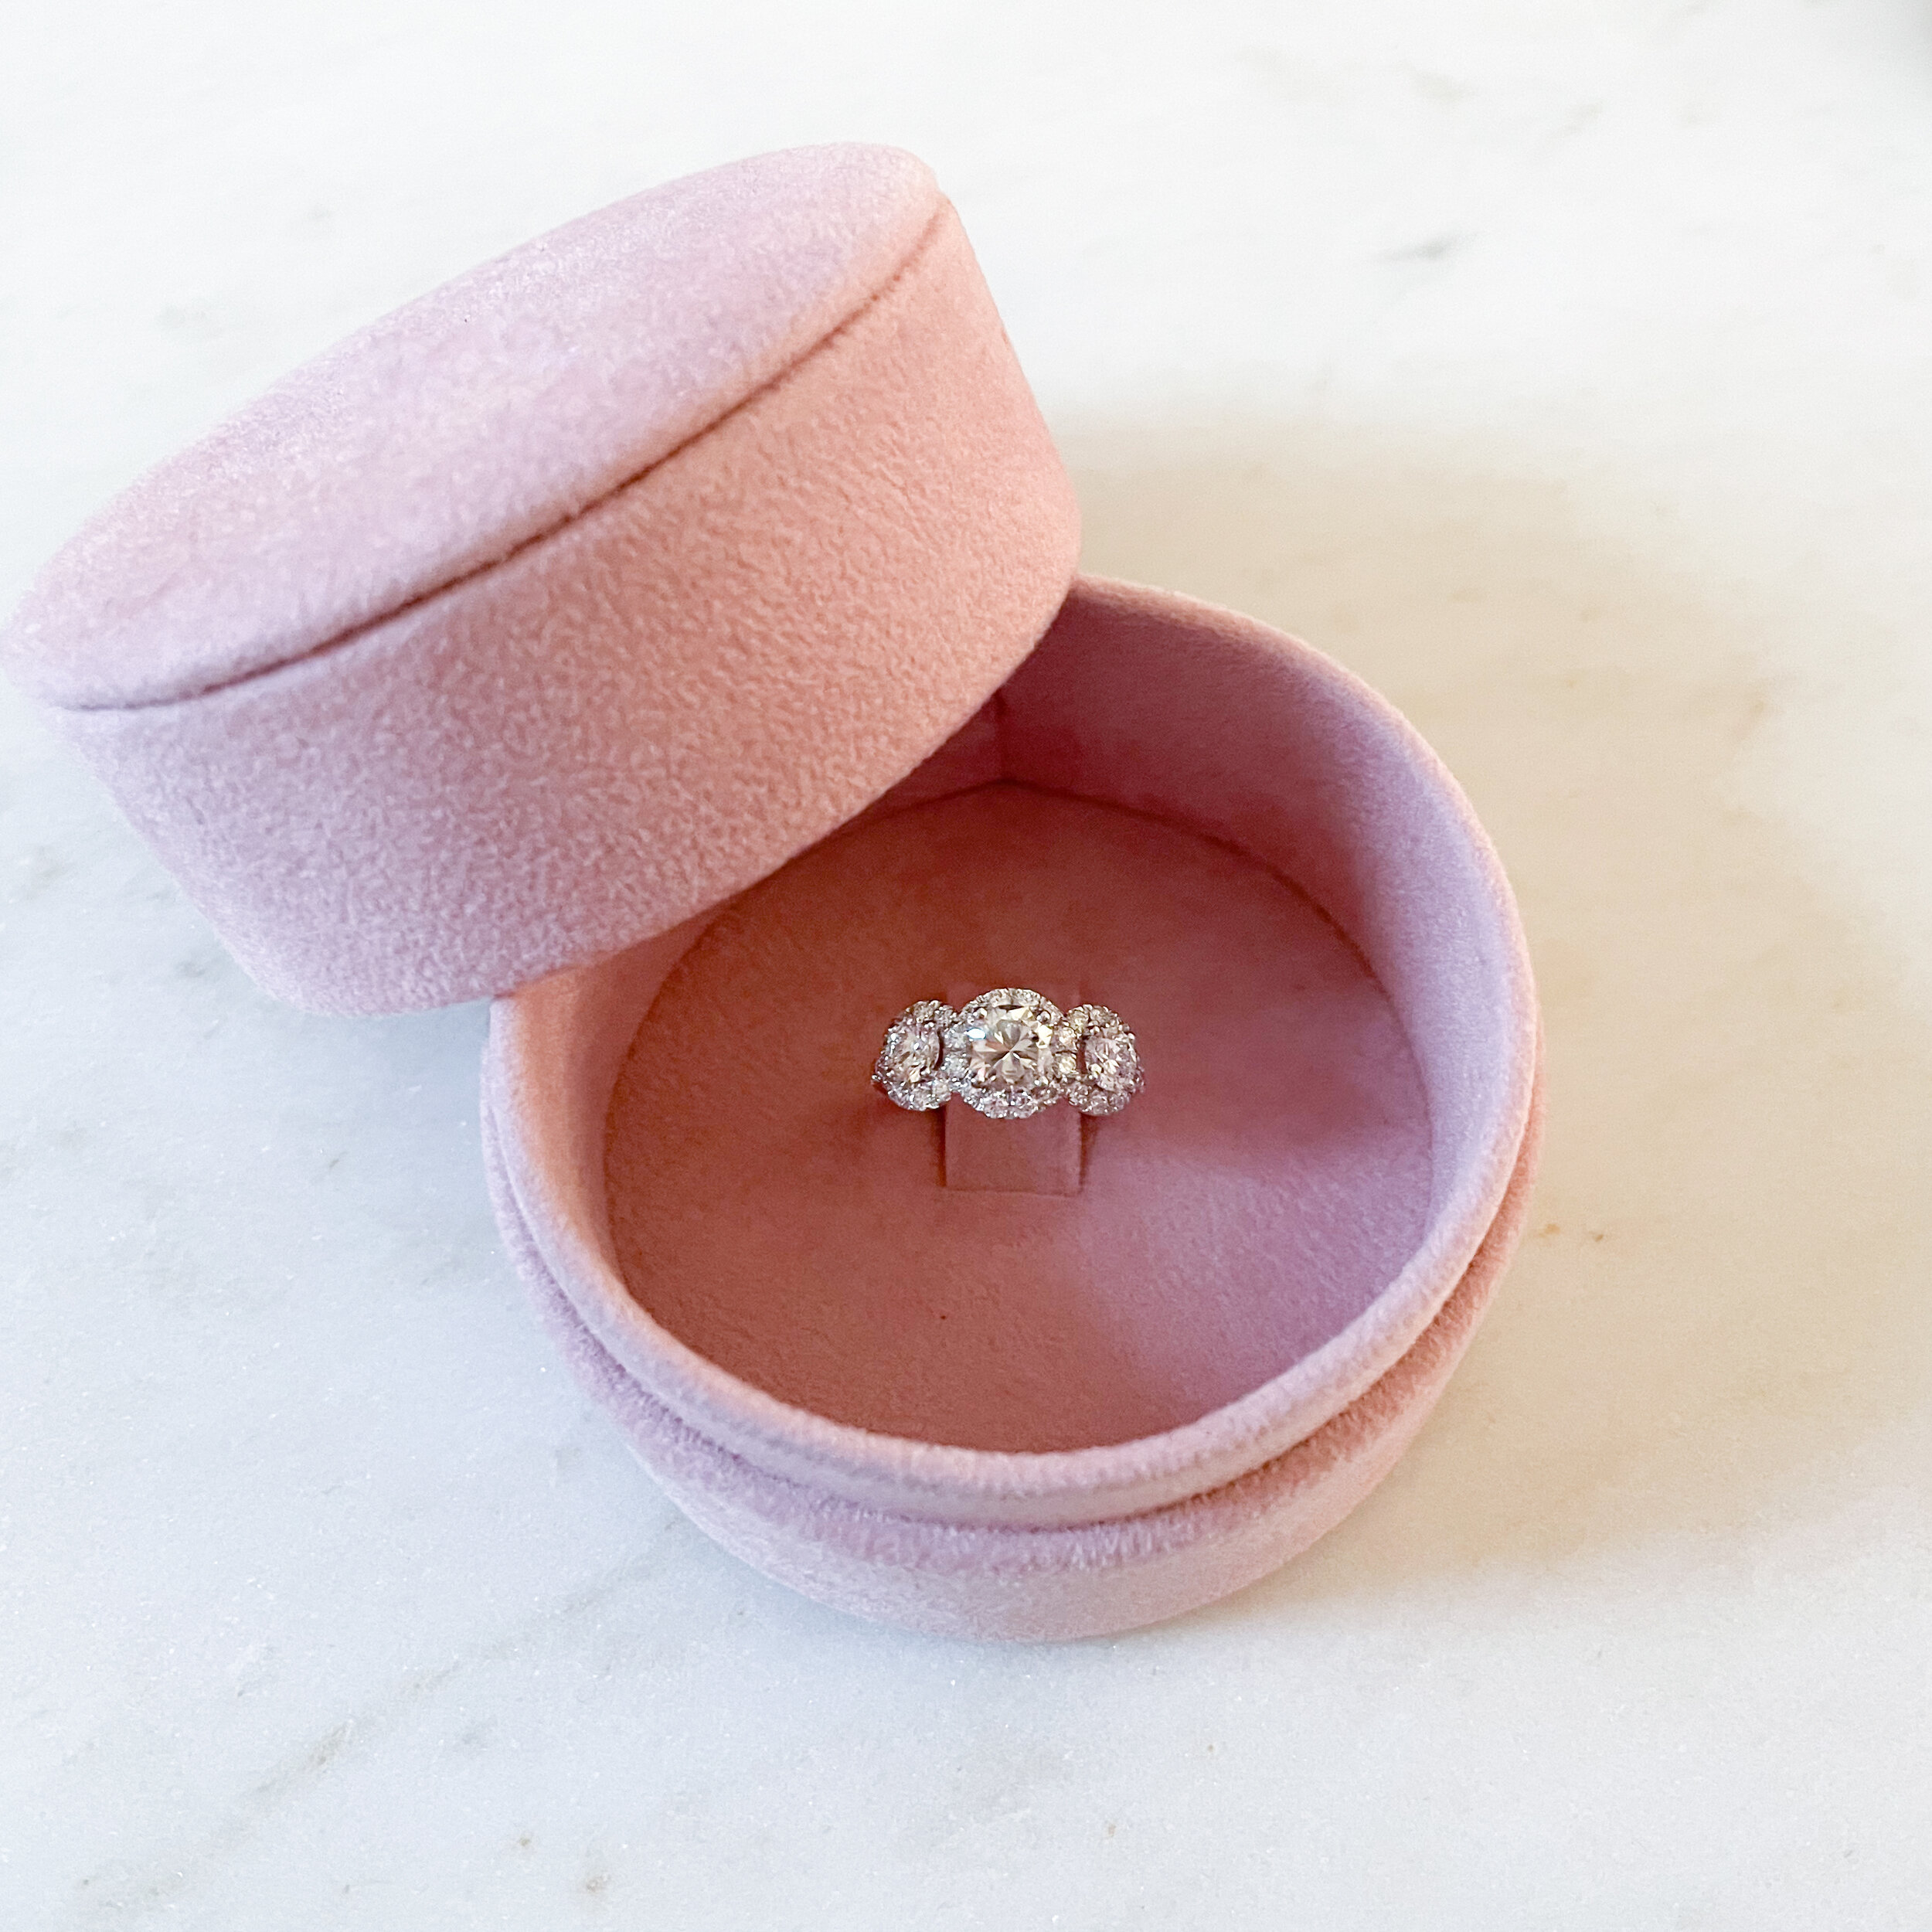 3-diamond engagement ring